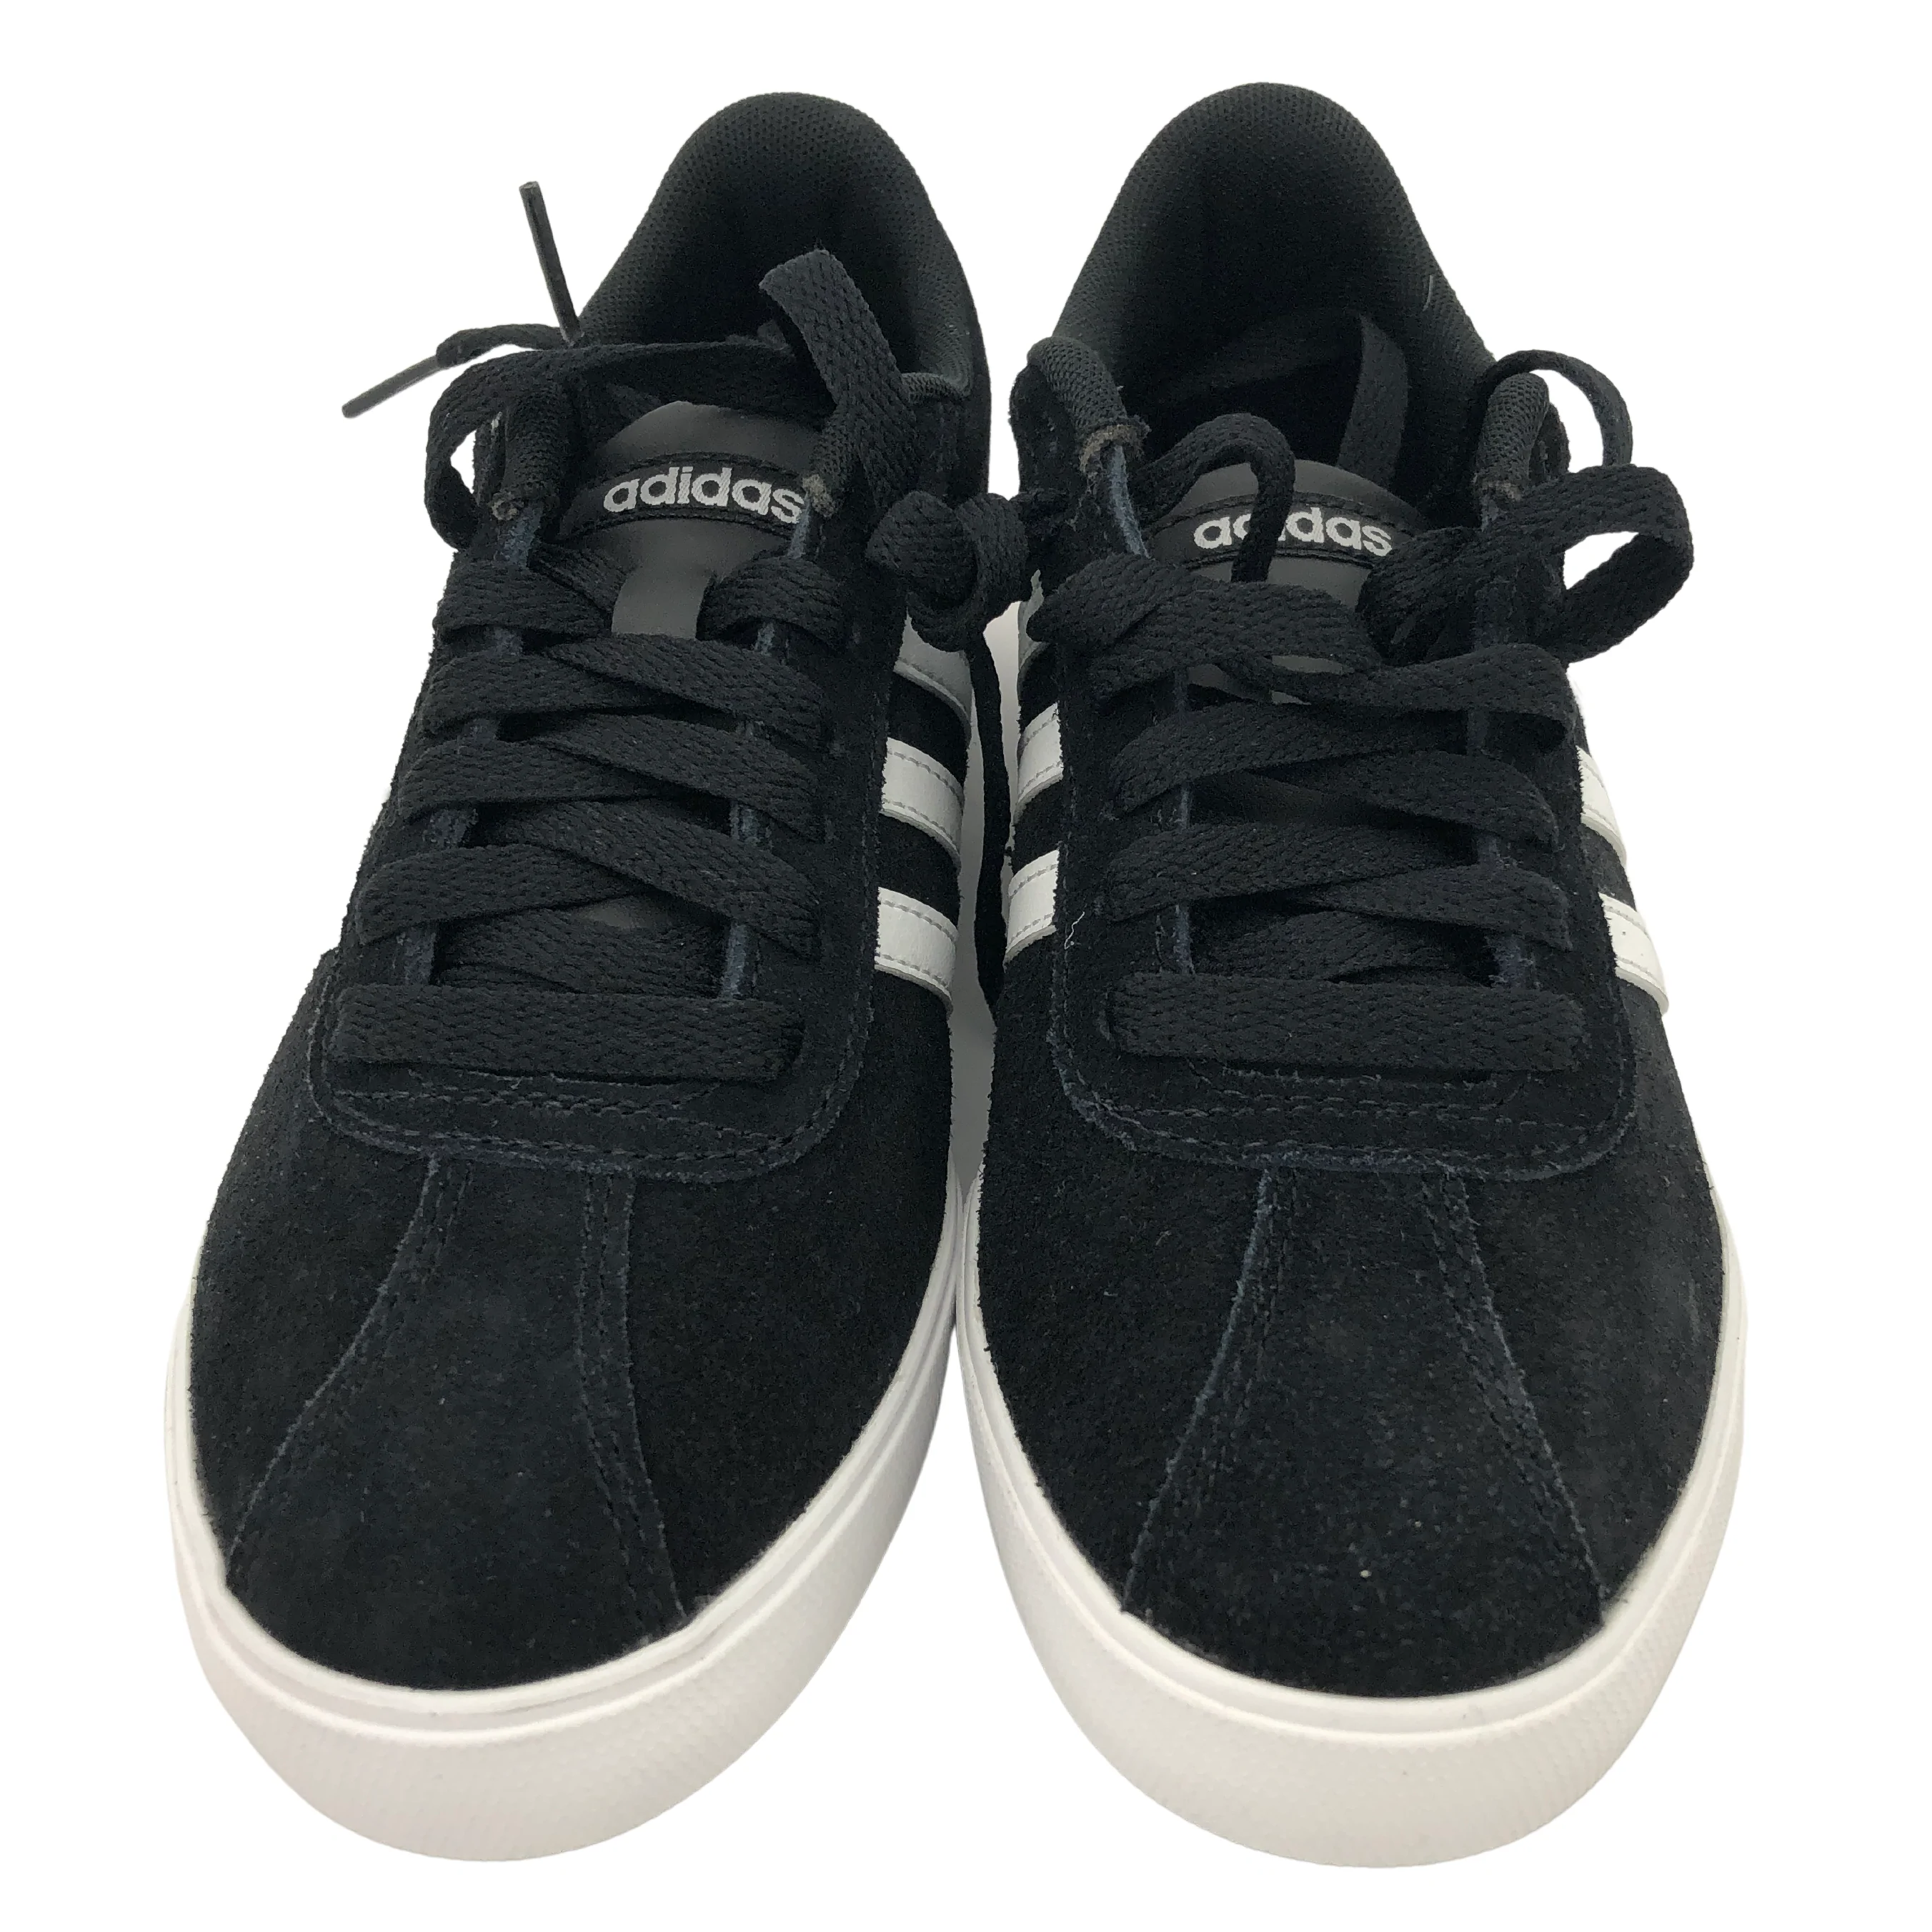 Adidas Women's Sneaker / Courtset / Black and White / Size 5